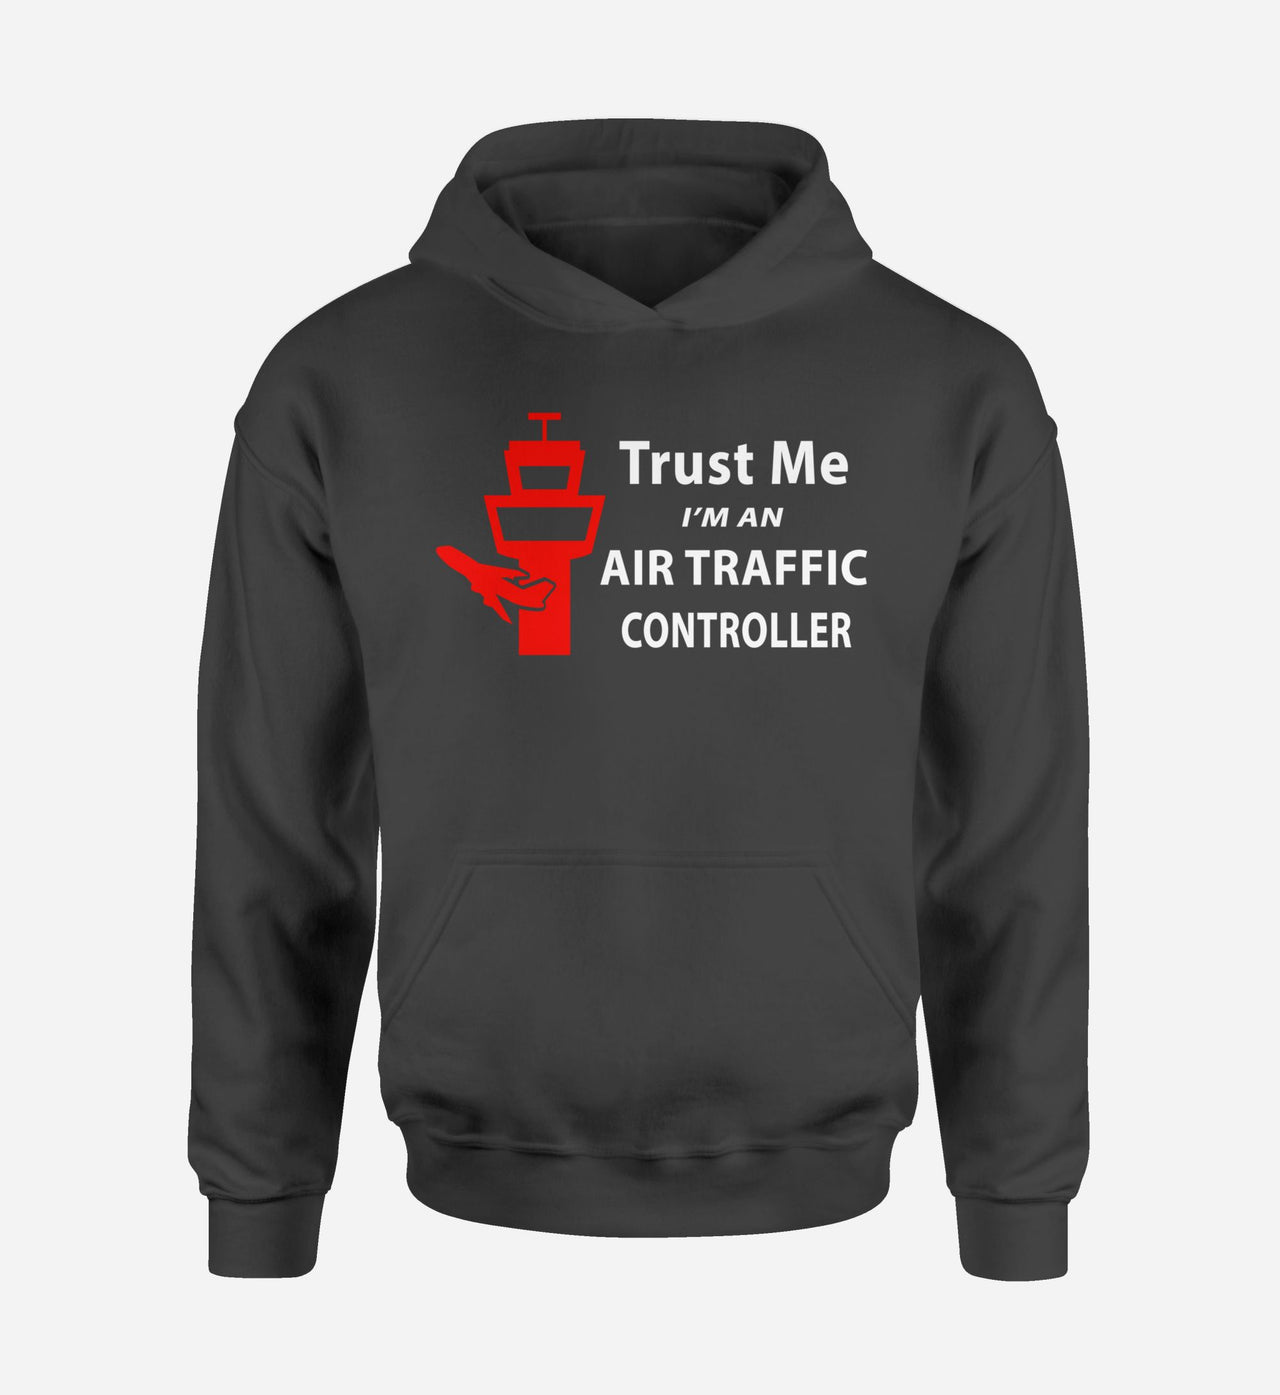 Trust Me I'm an Air Traffic Controller Designed Hoodies